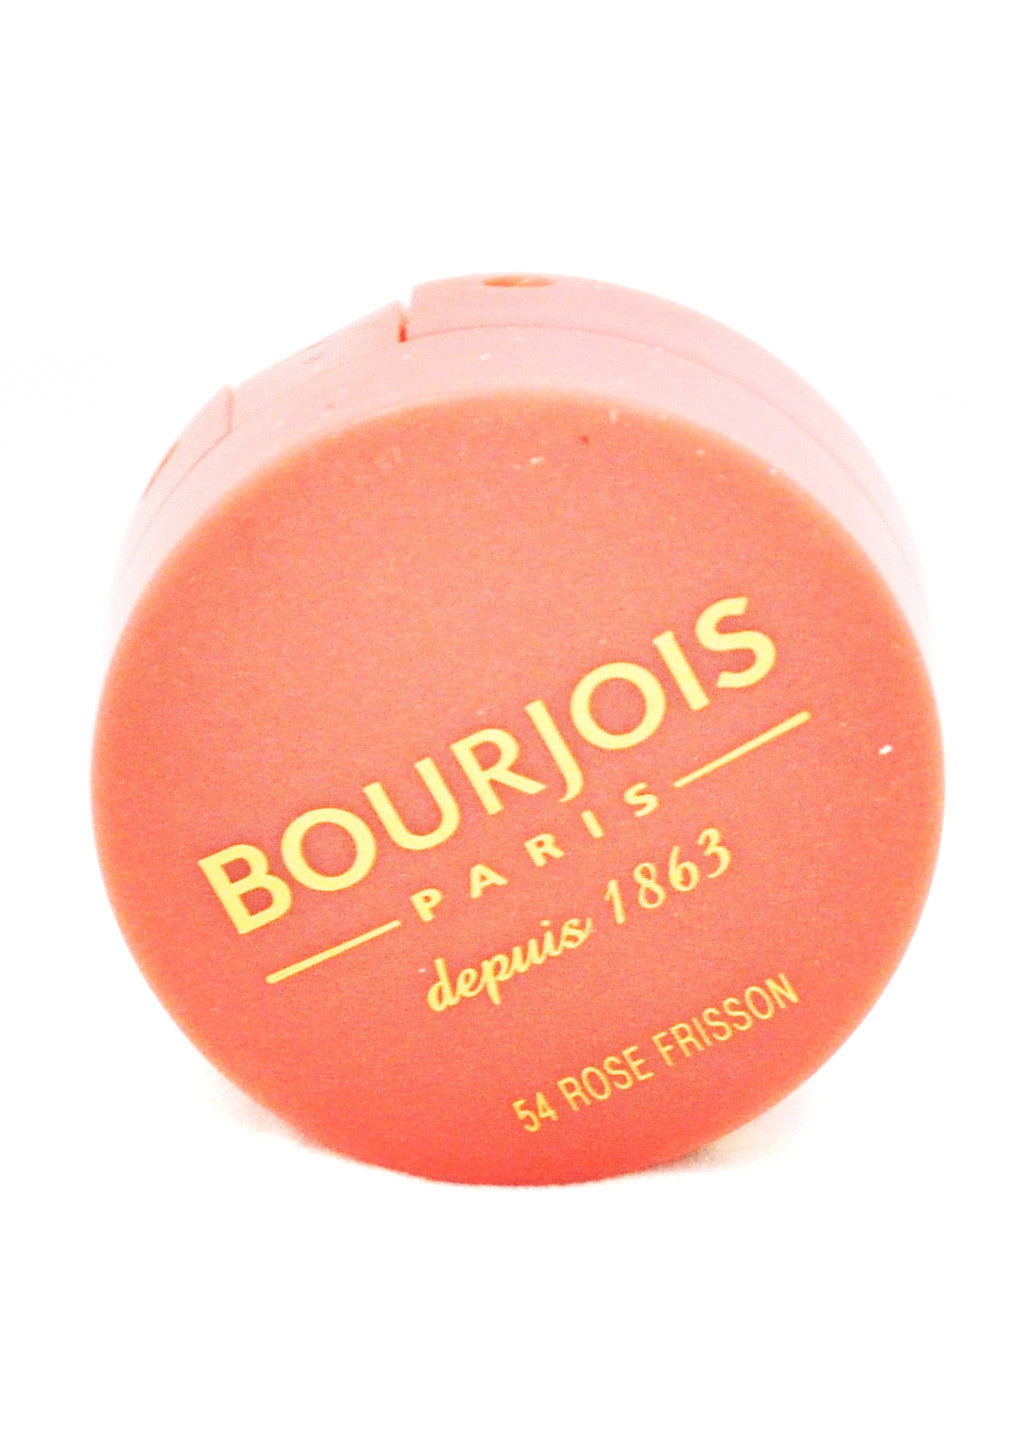 Румяна № 54 розовая фрезиа 2,5 гр Bourjois (15111901)